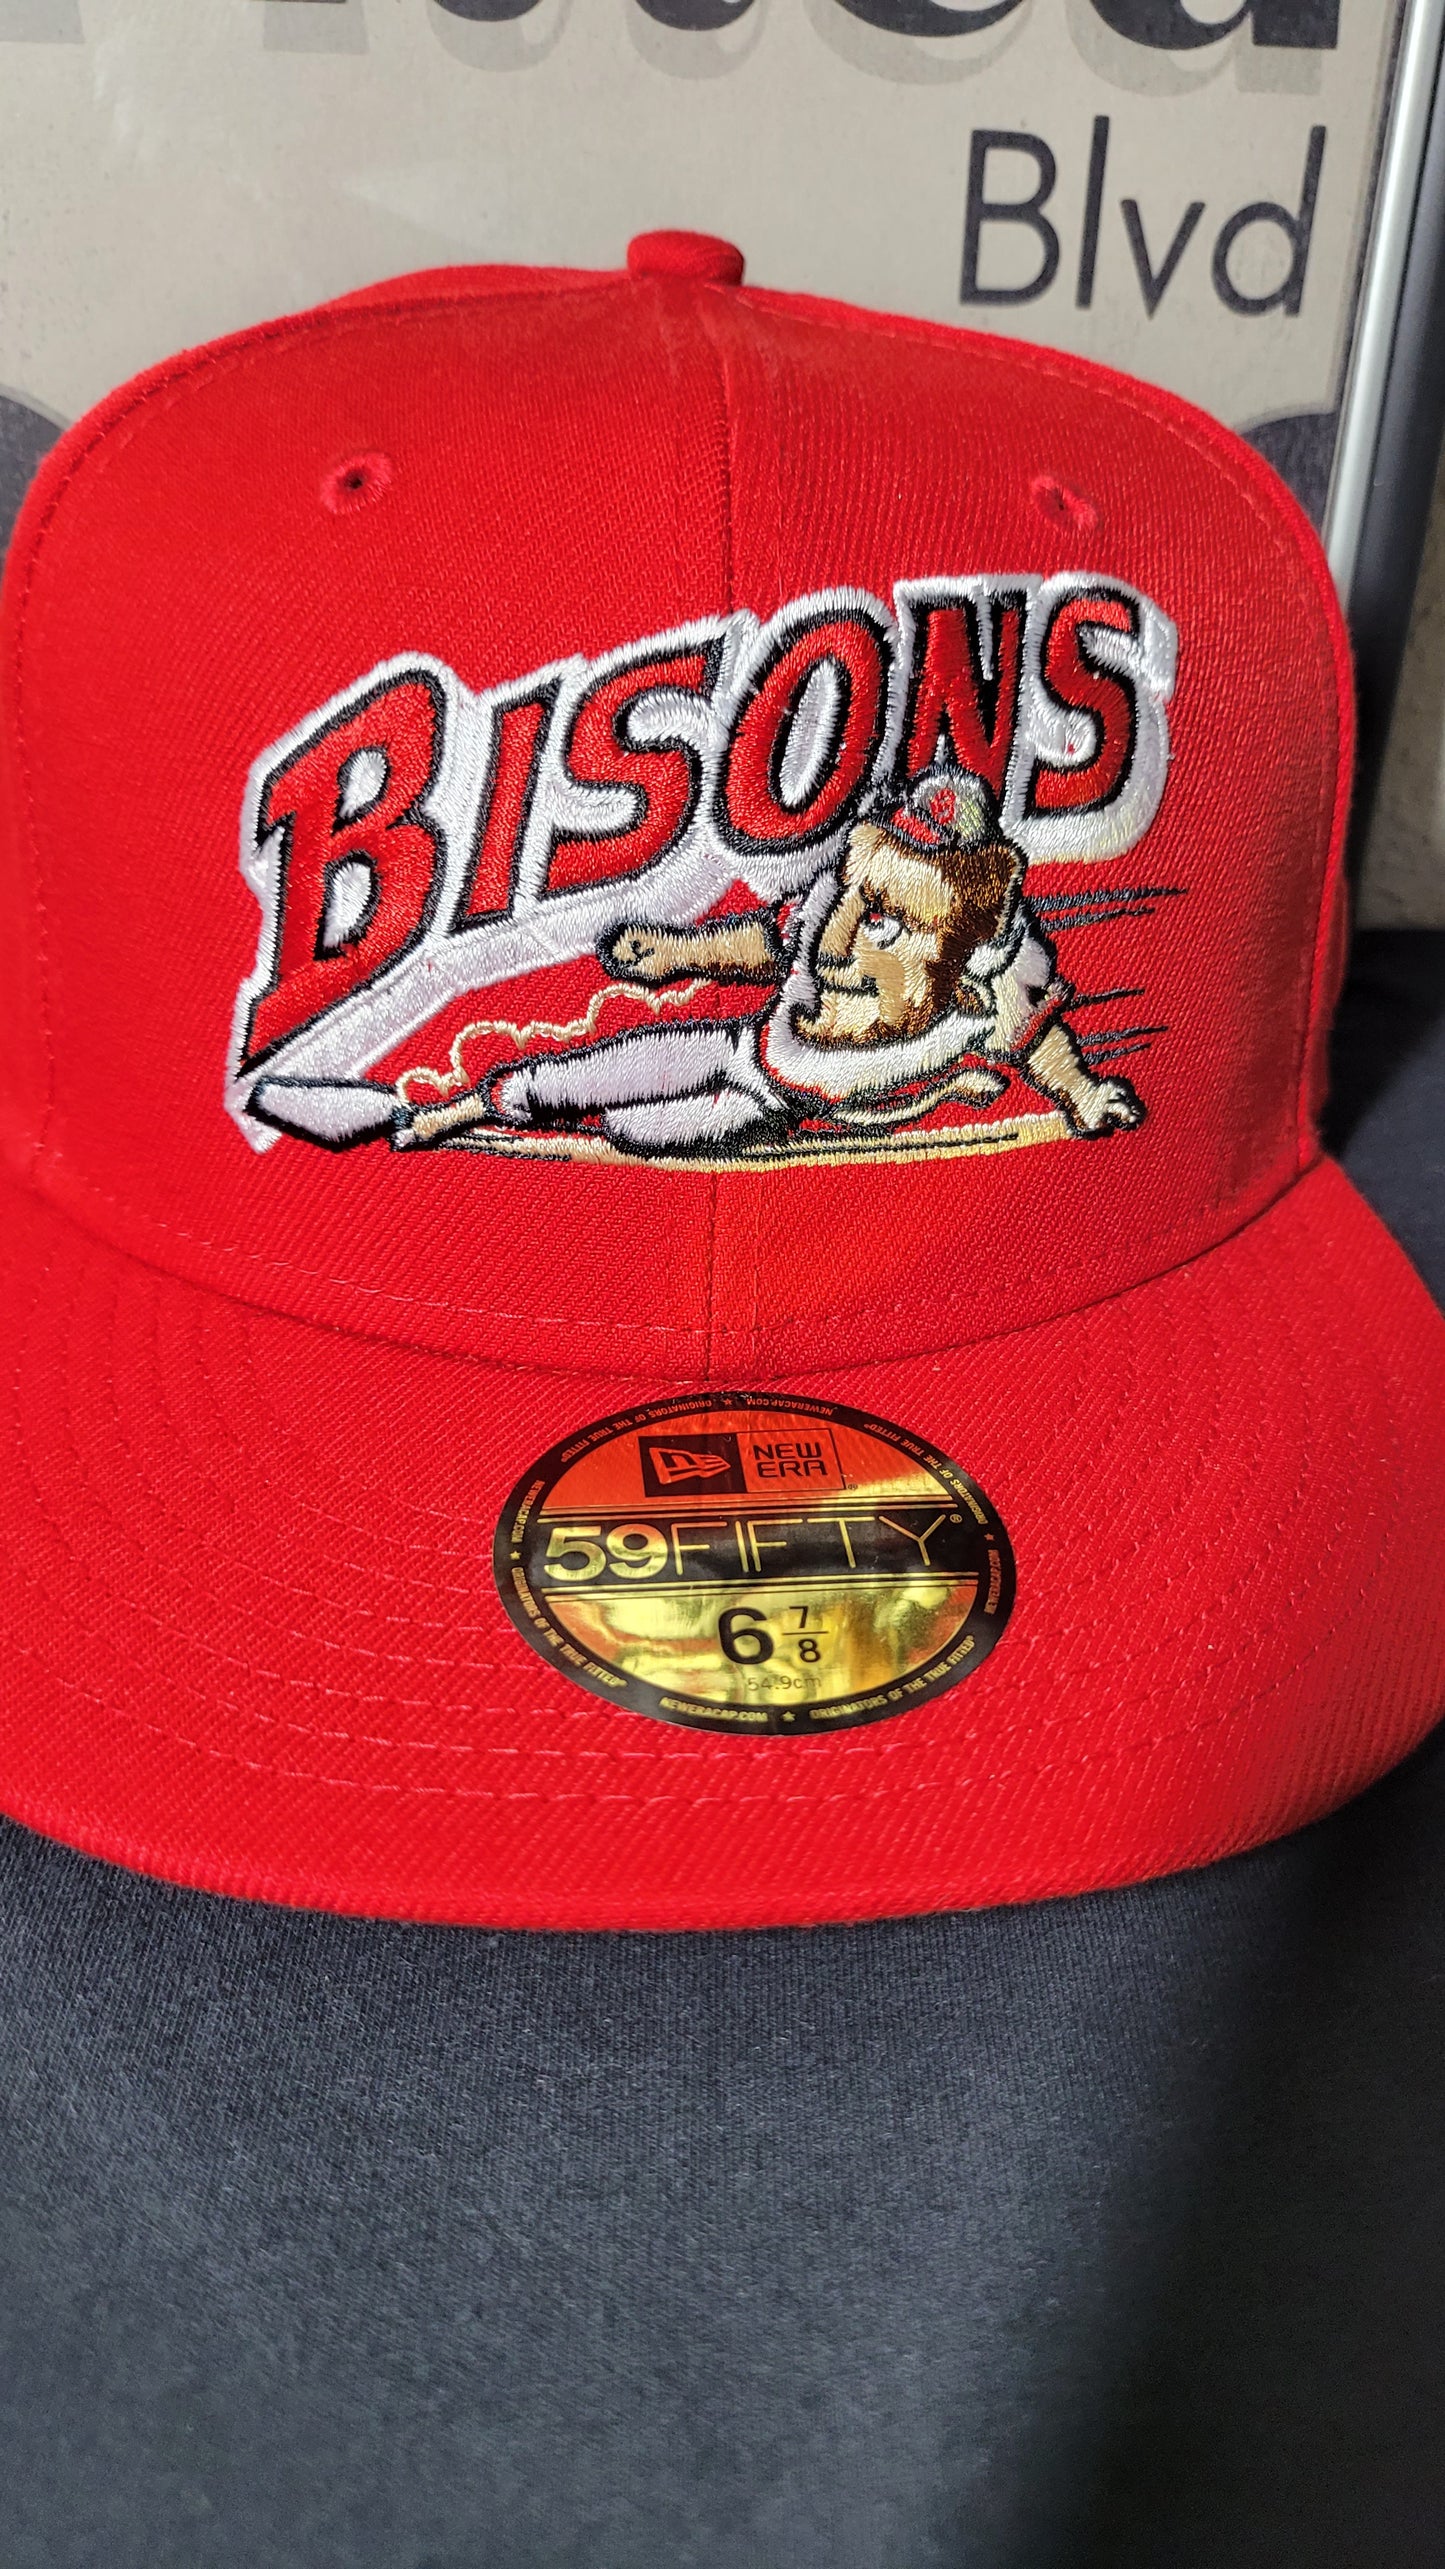 Buffalo Bisons Online Exclusive New Era Hat